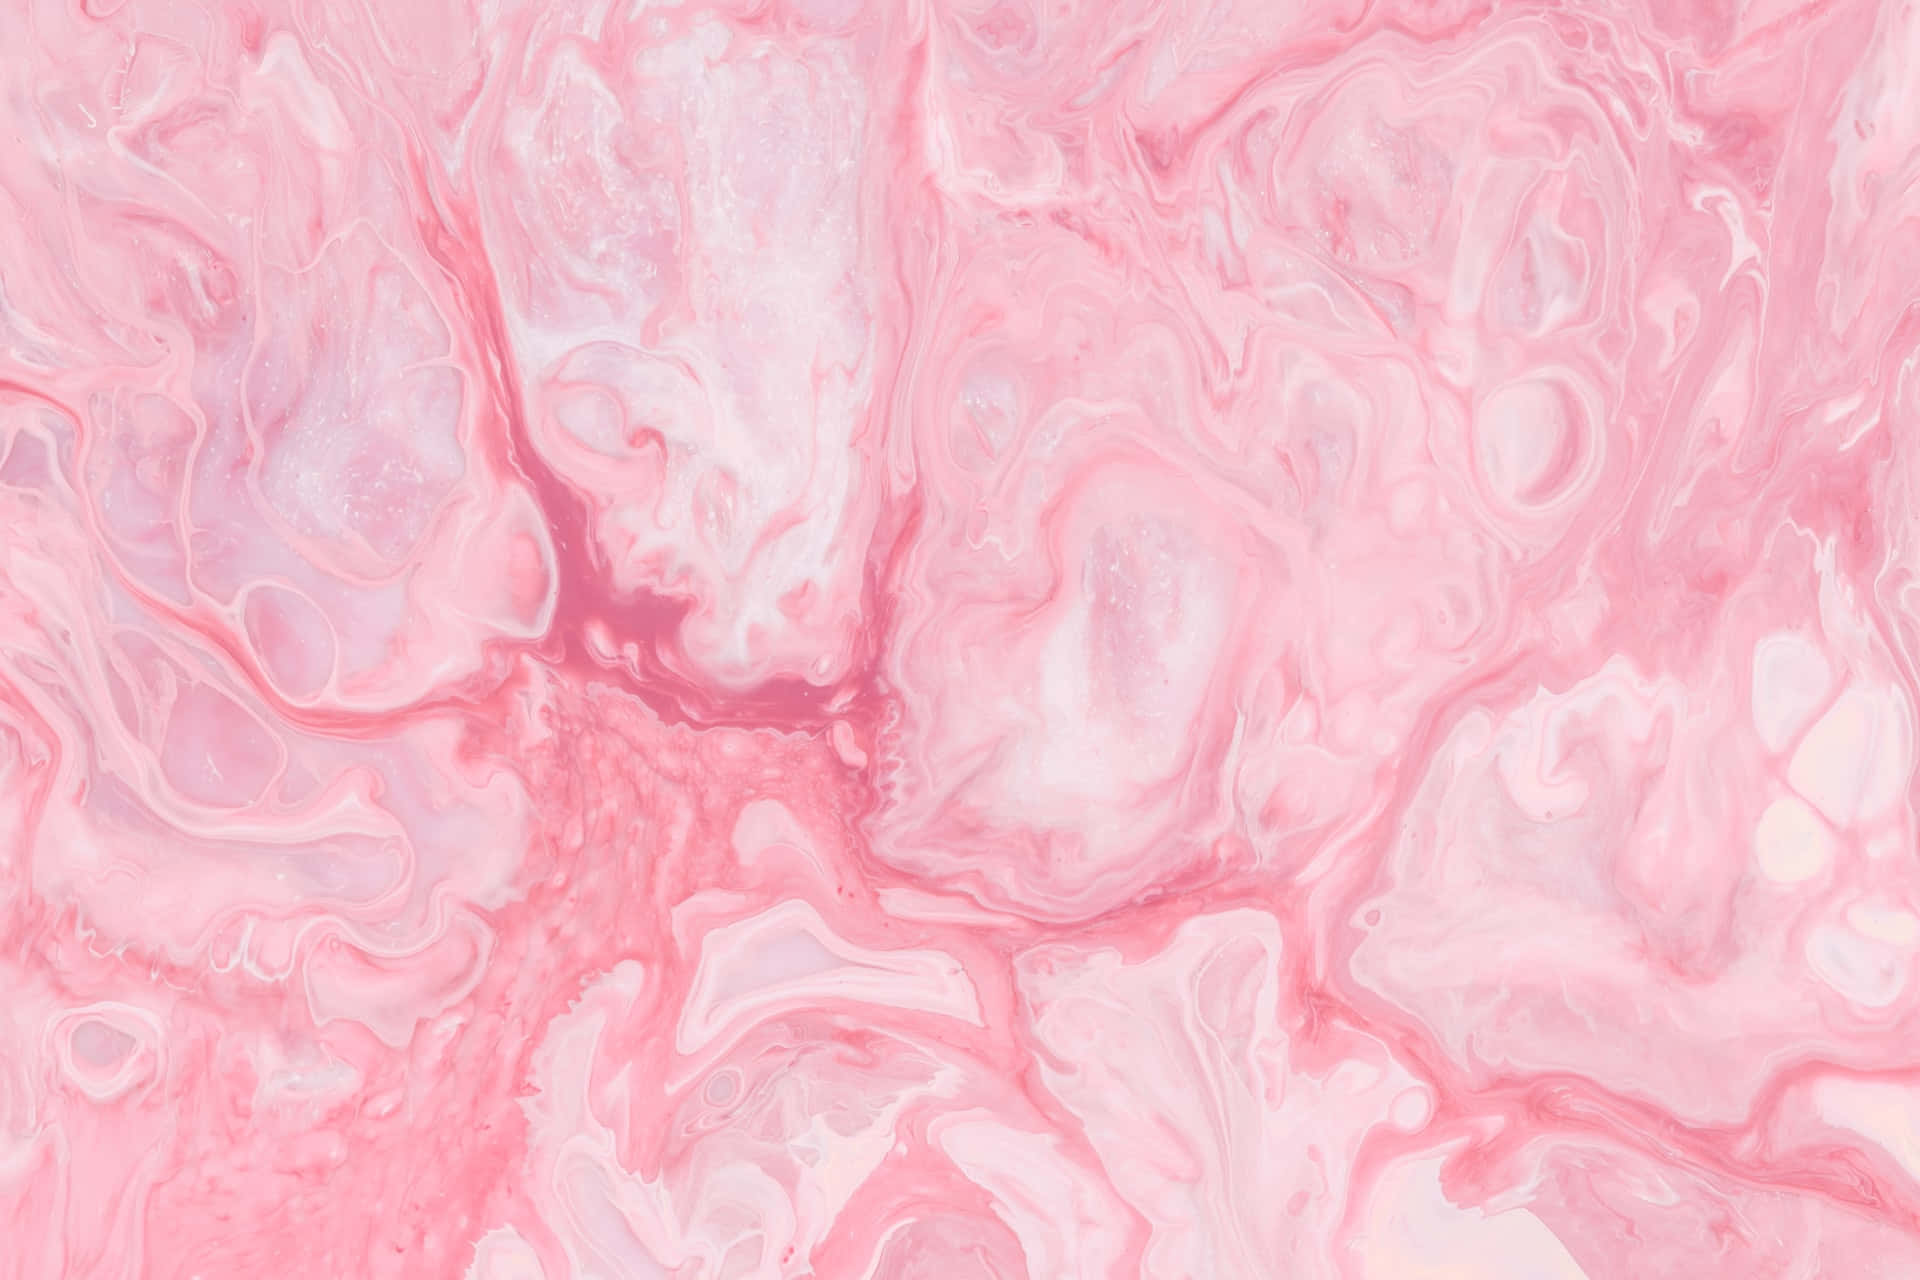 100+] Plain Pink Desktop Wallpapers